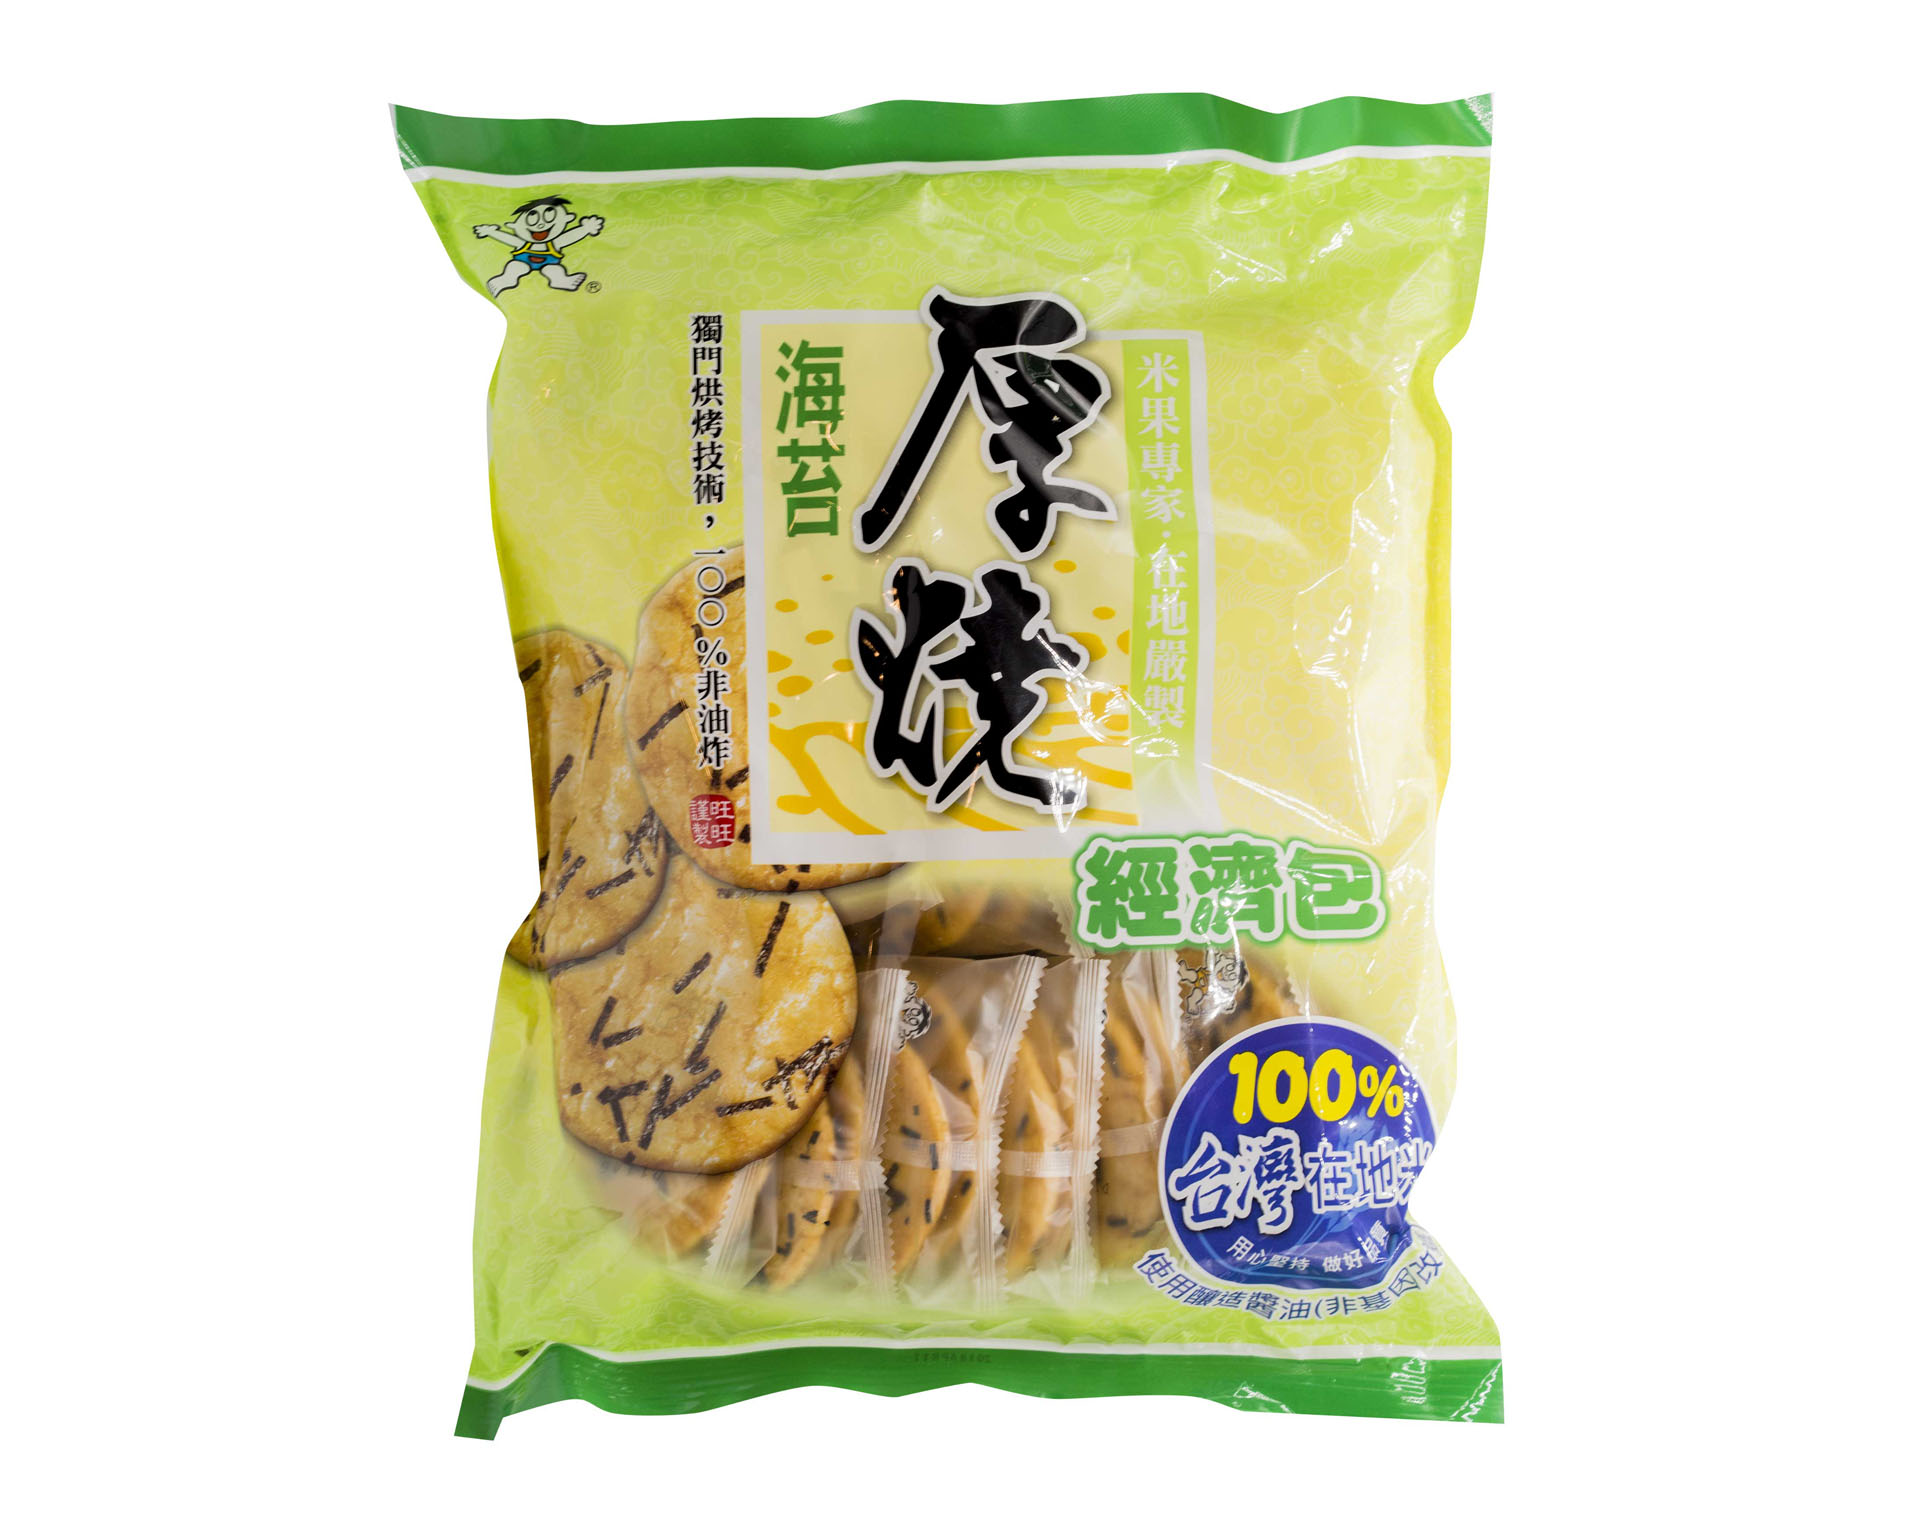 旺旺 厚燒海苔 (經濟包) Want Want Seaweed Rice Cracker